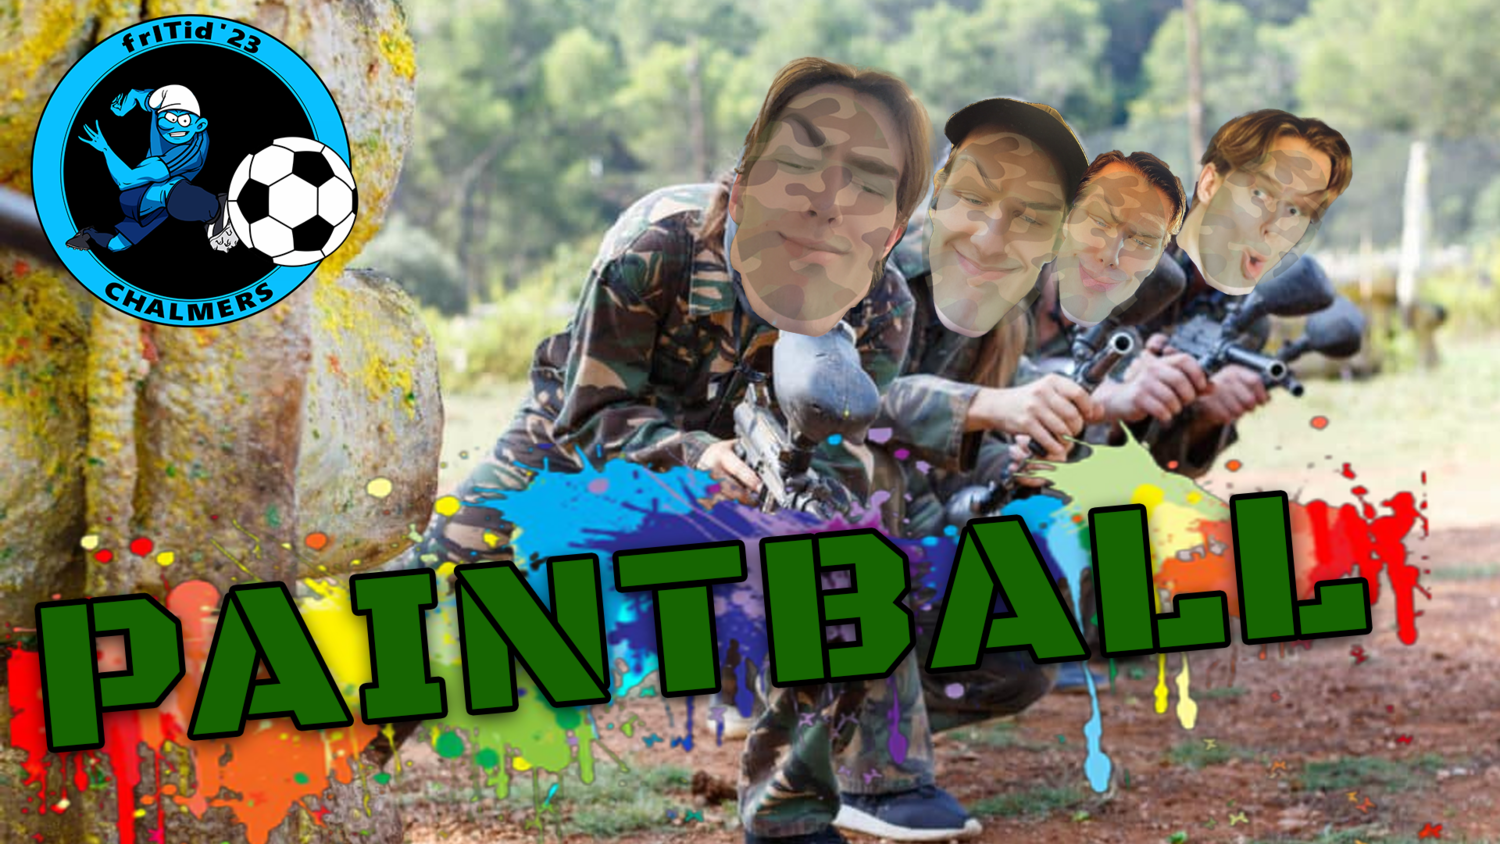 Paintball PR